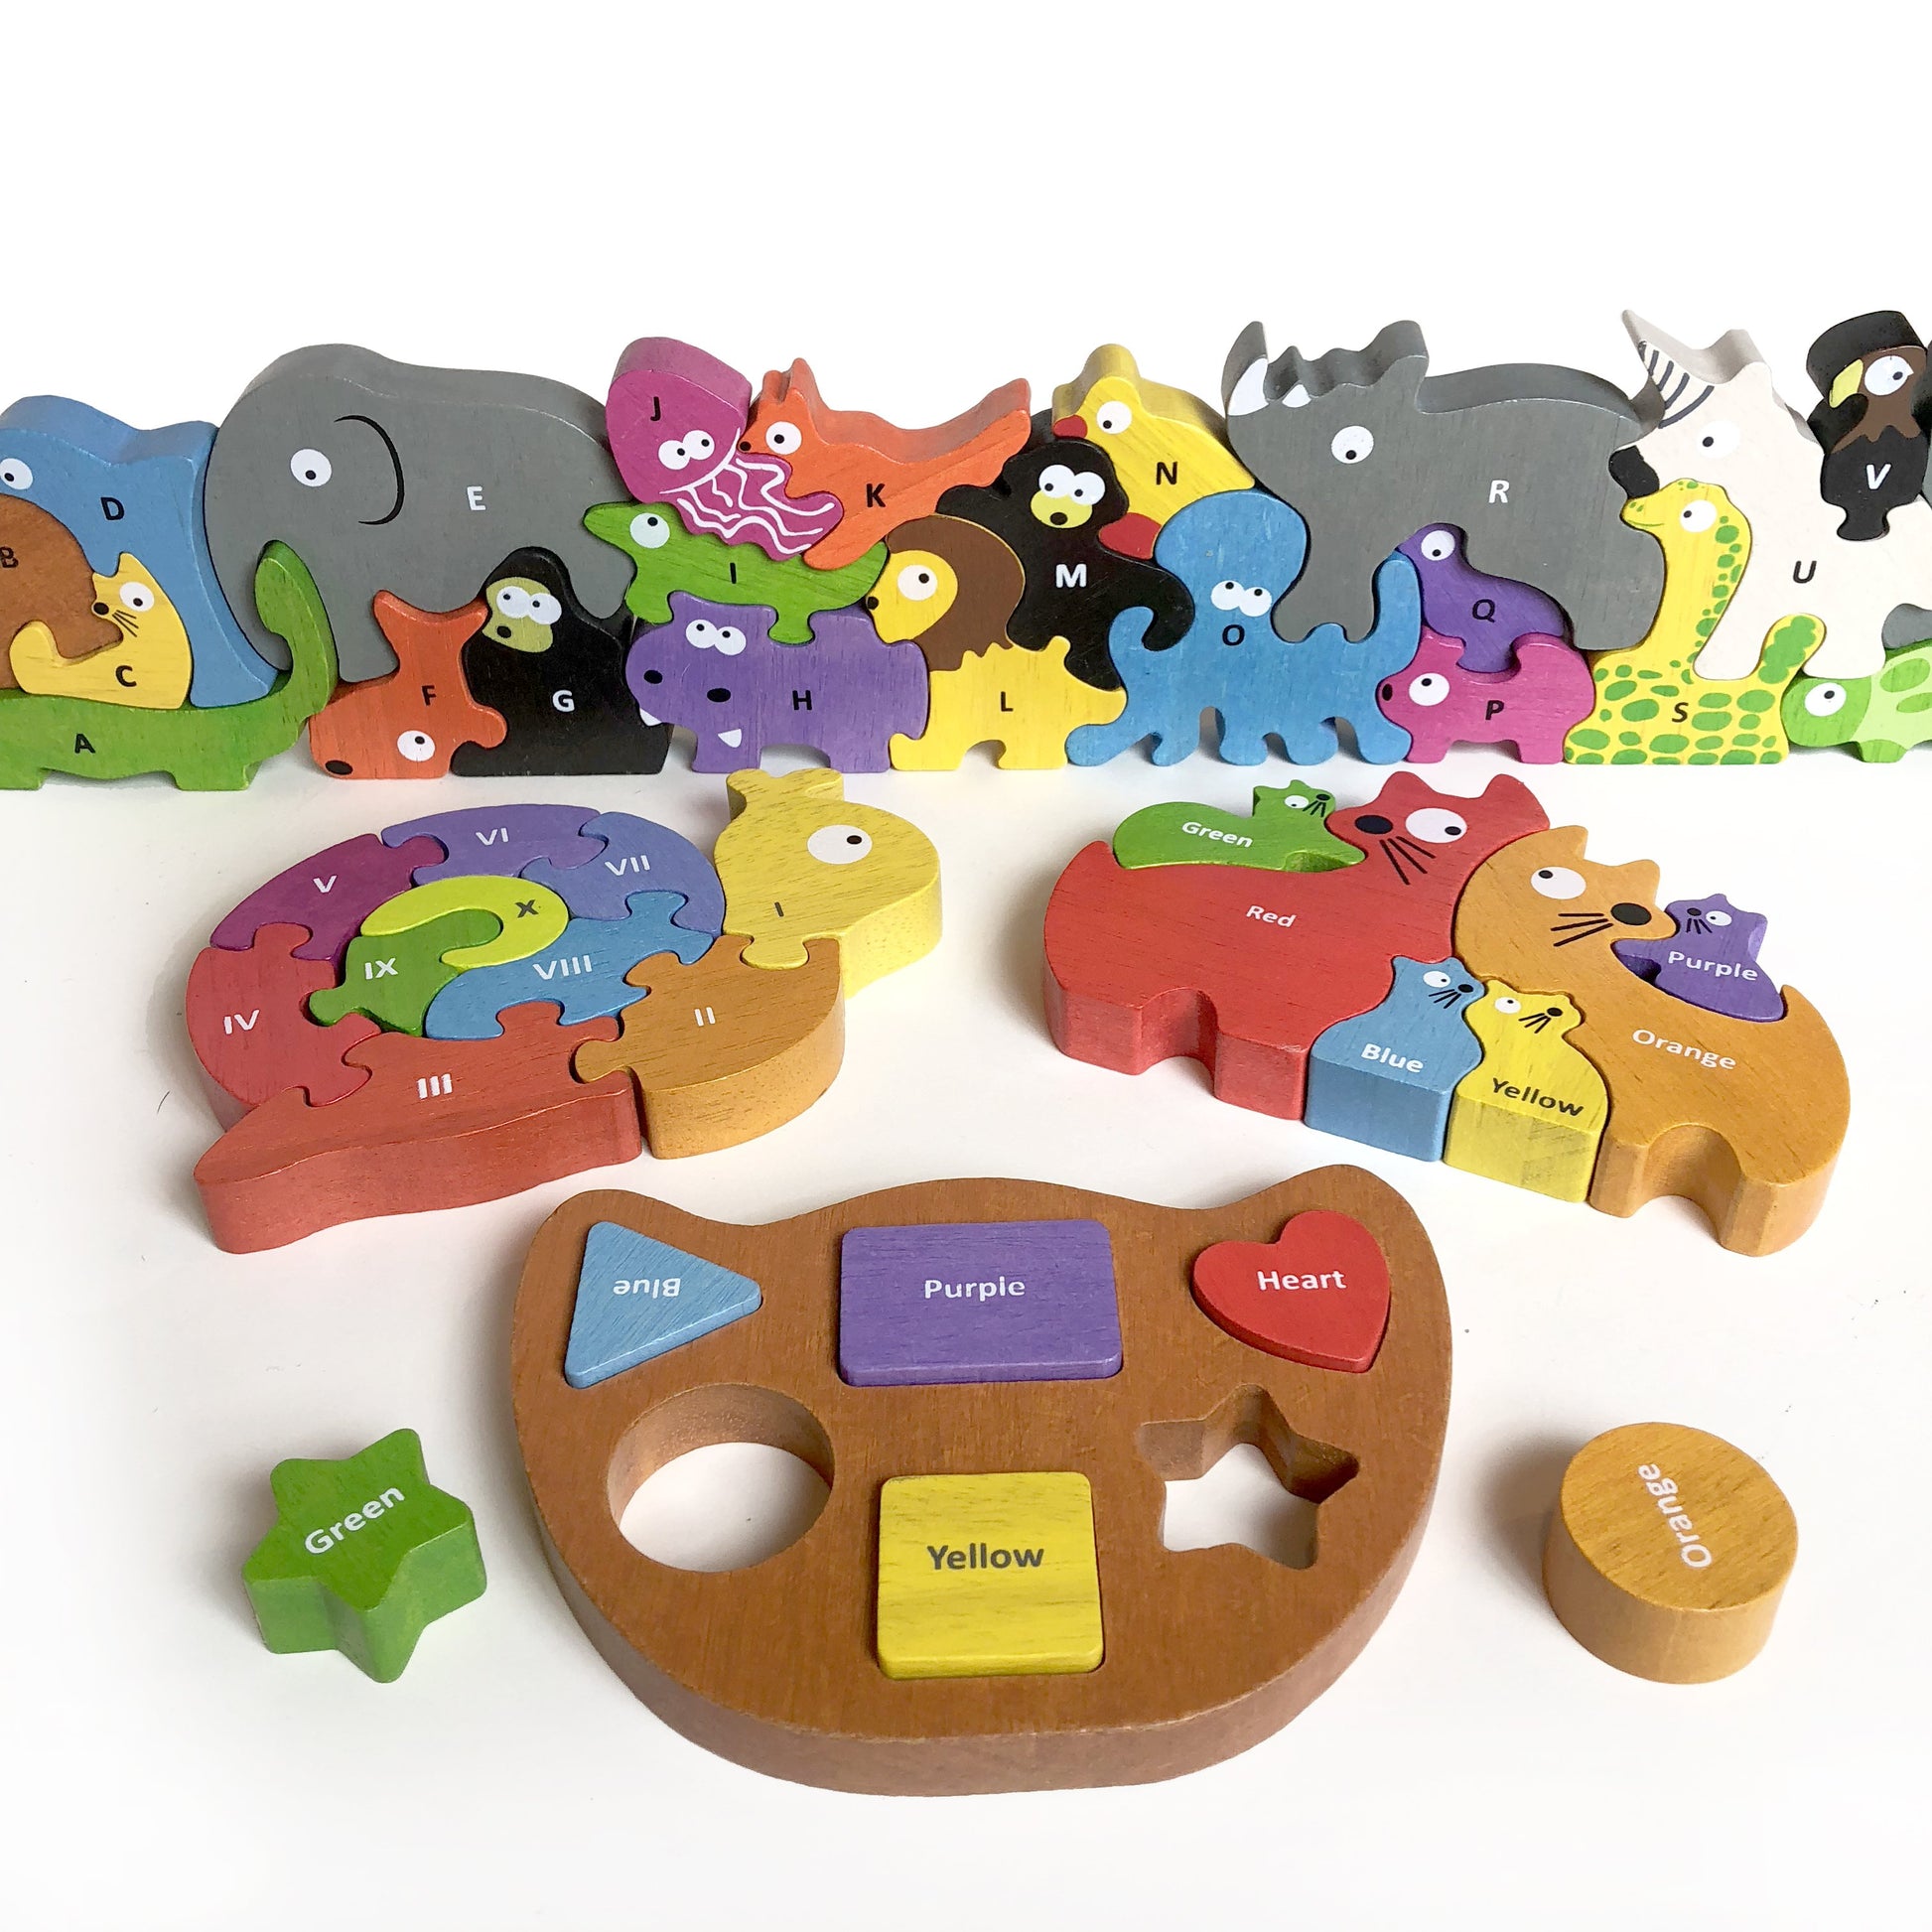 Barlowe's Learning Box - Super Toy